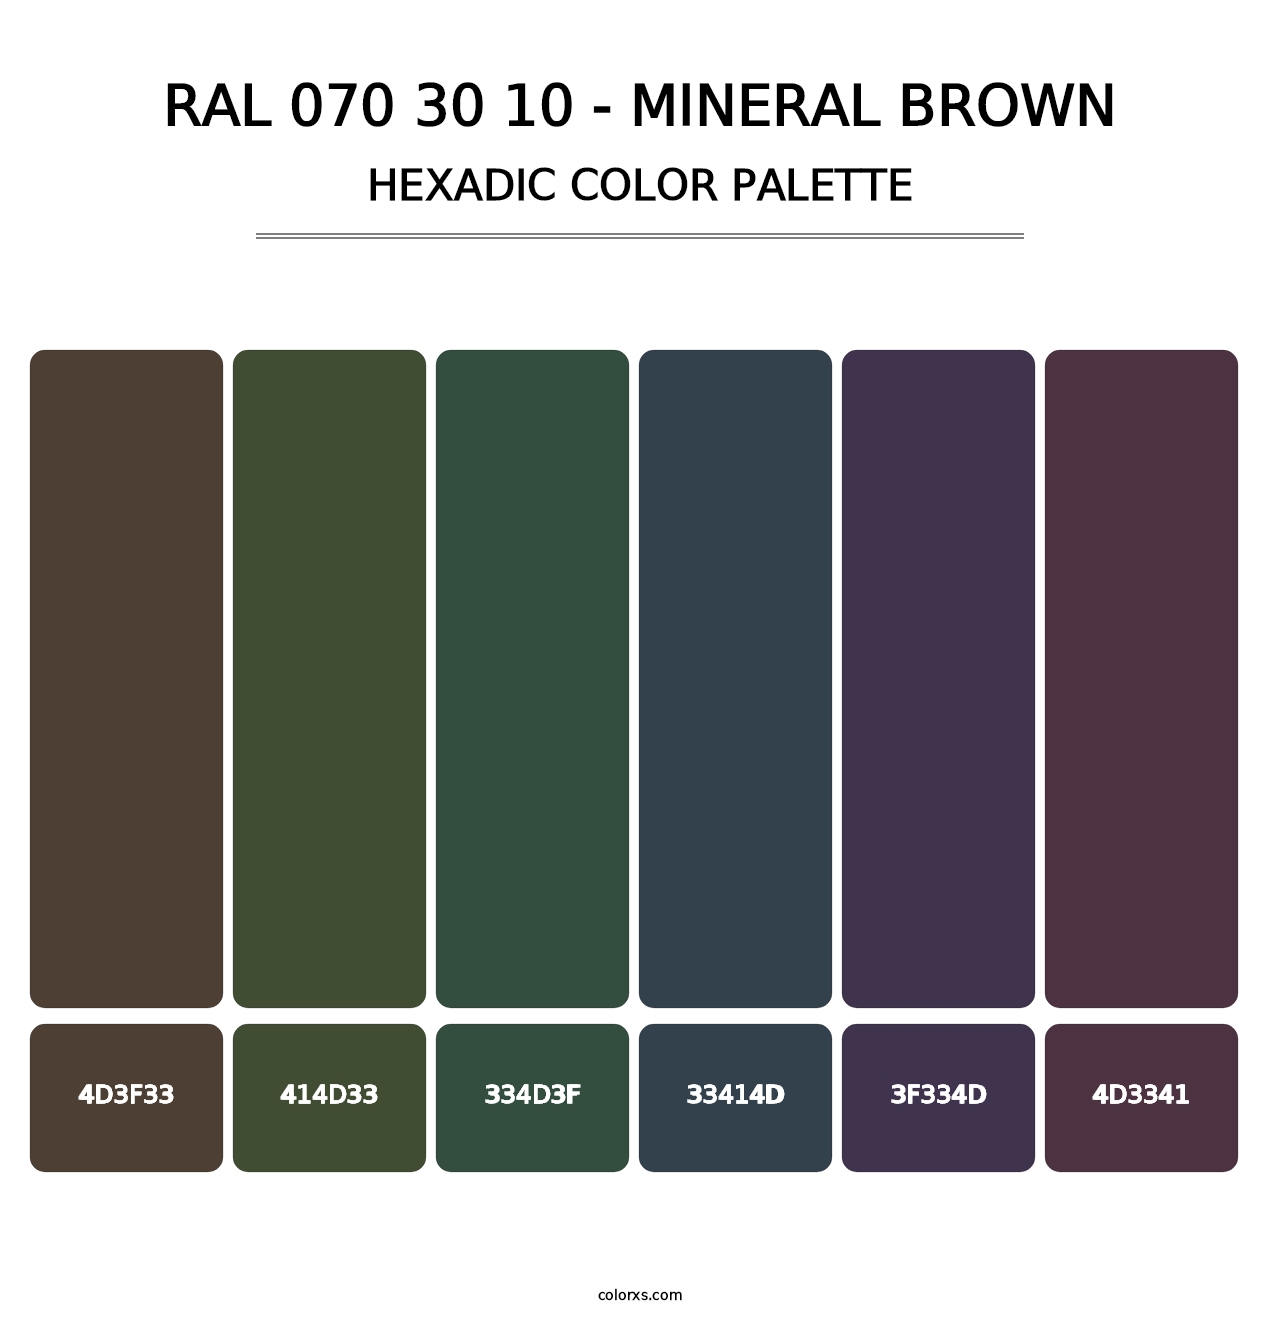 RAL 070 30 10 - Mineral Brown - Hexadic Color Palette